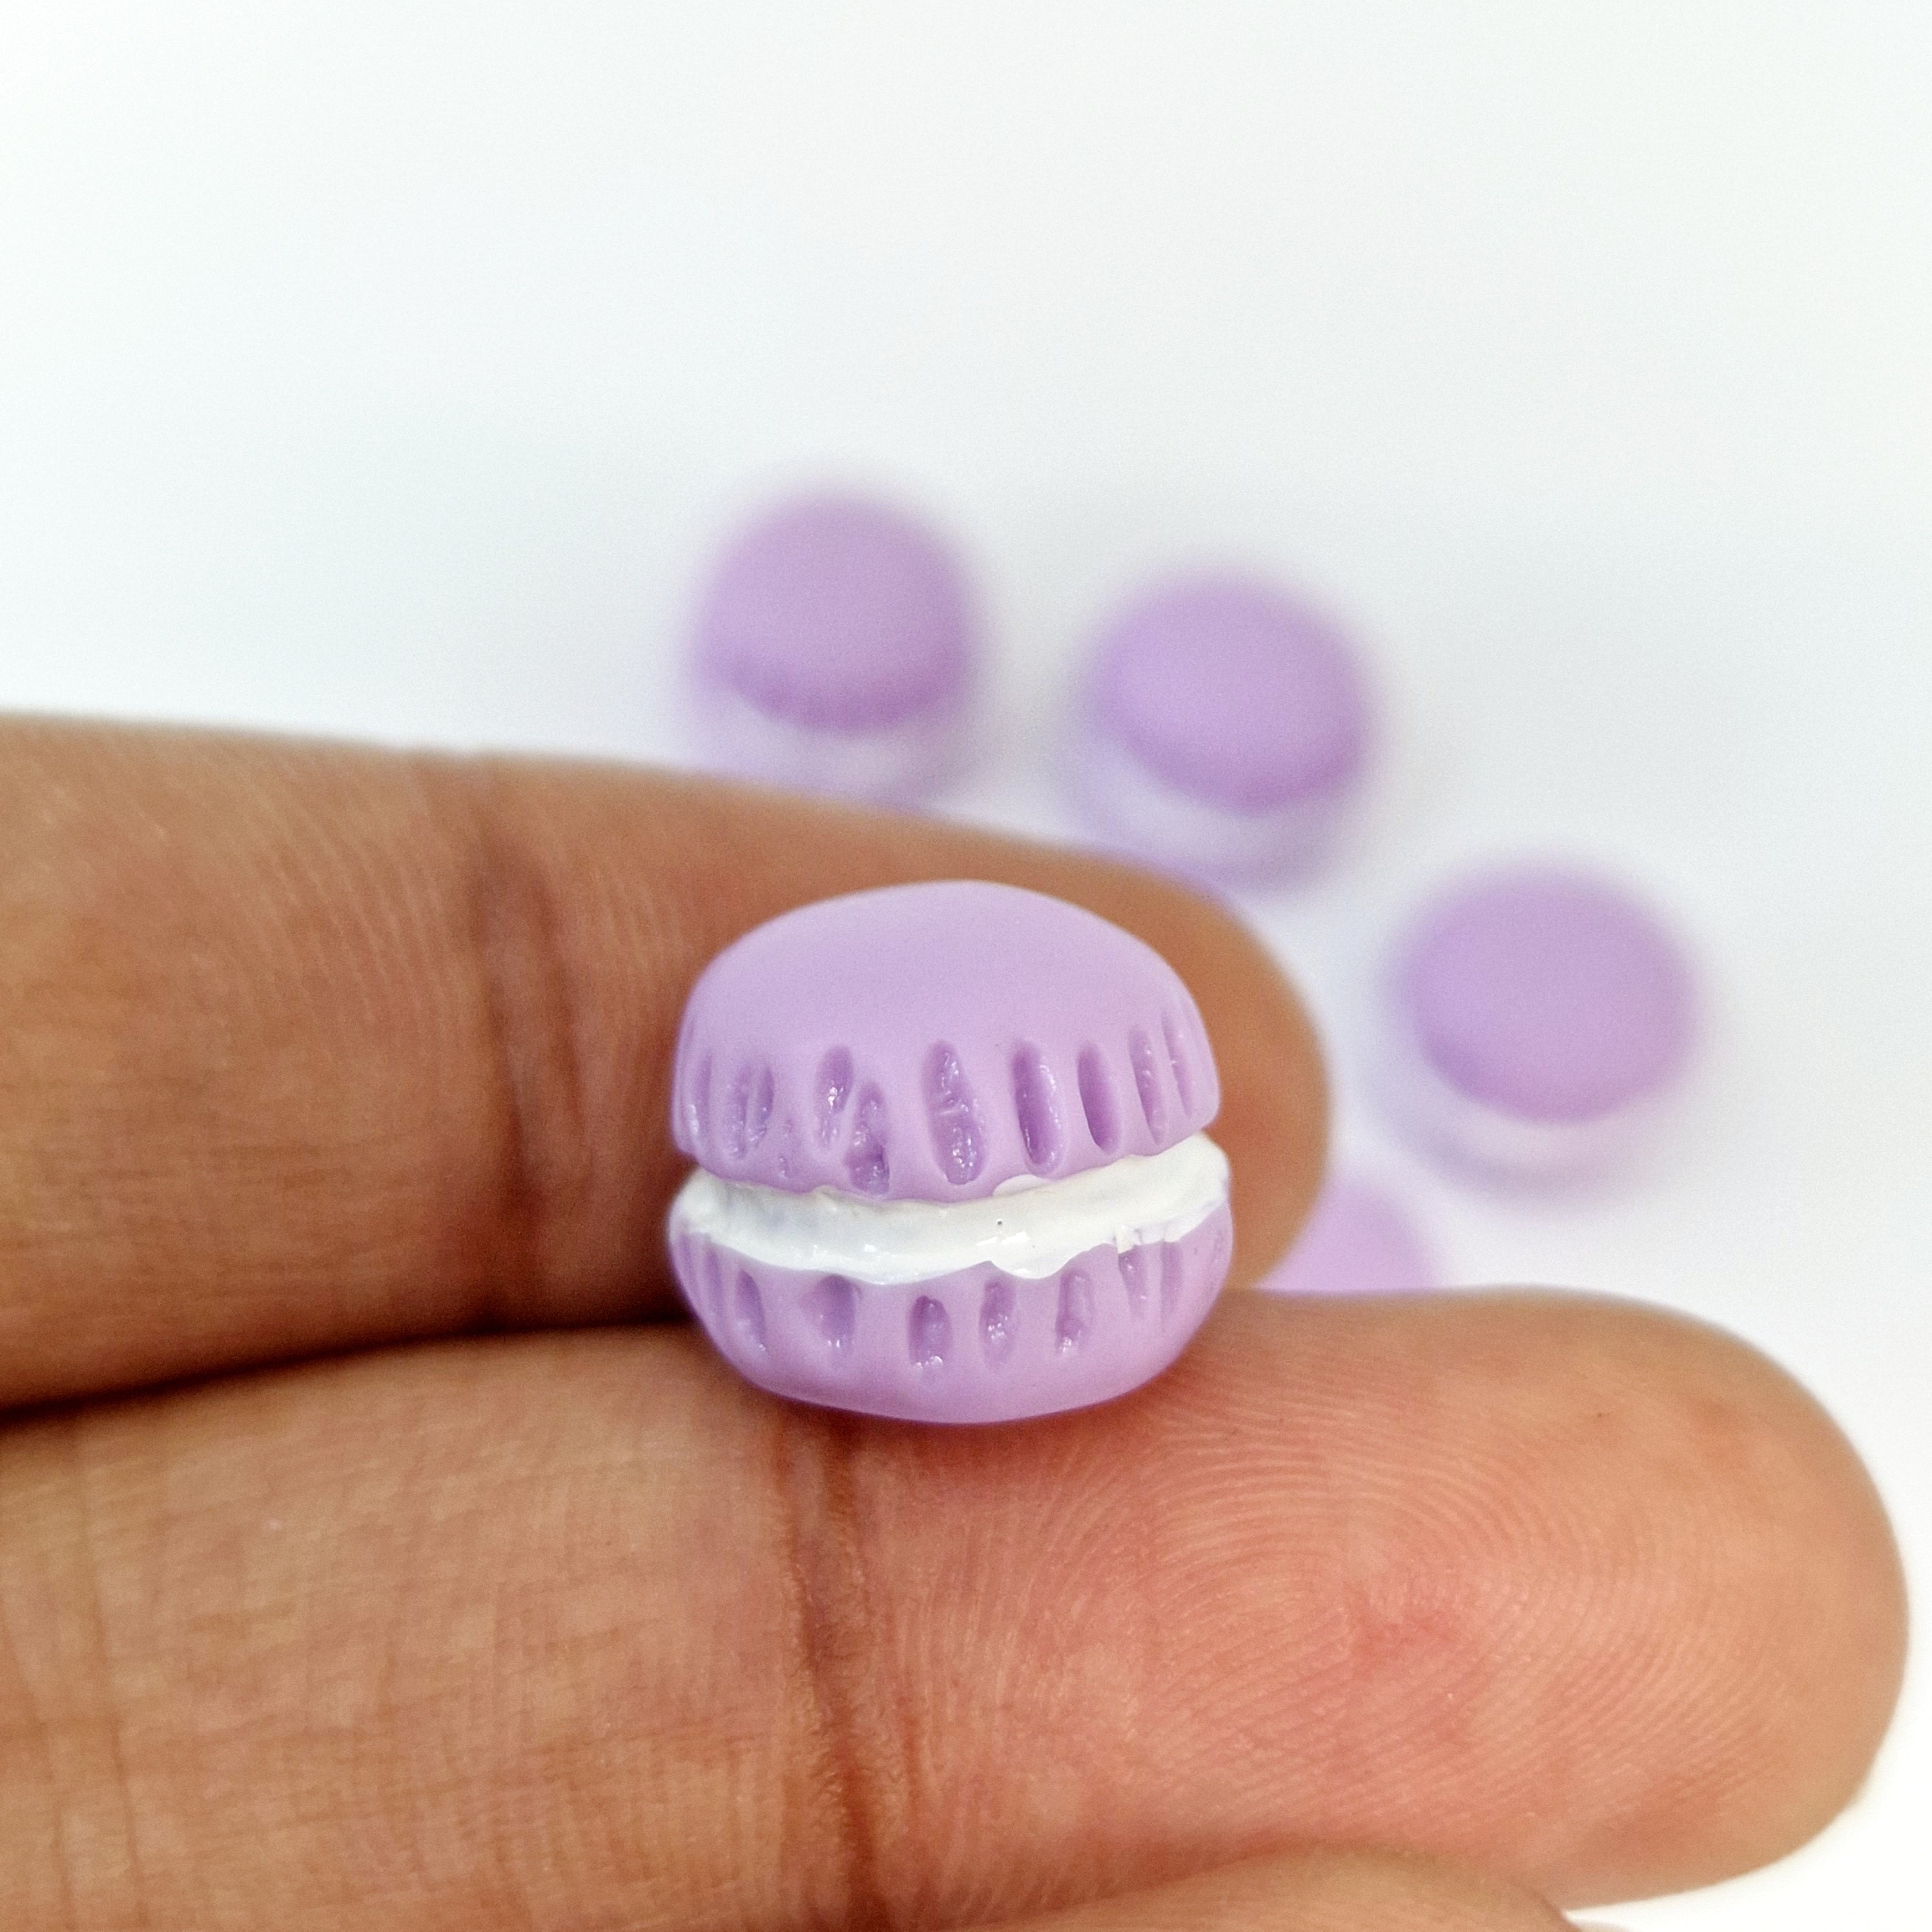 MajorCrafts 6pcs 13mm Light Purple Flat Back Miniature Cookies and Cream Kawaii Cabochons